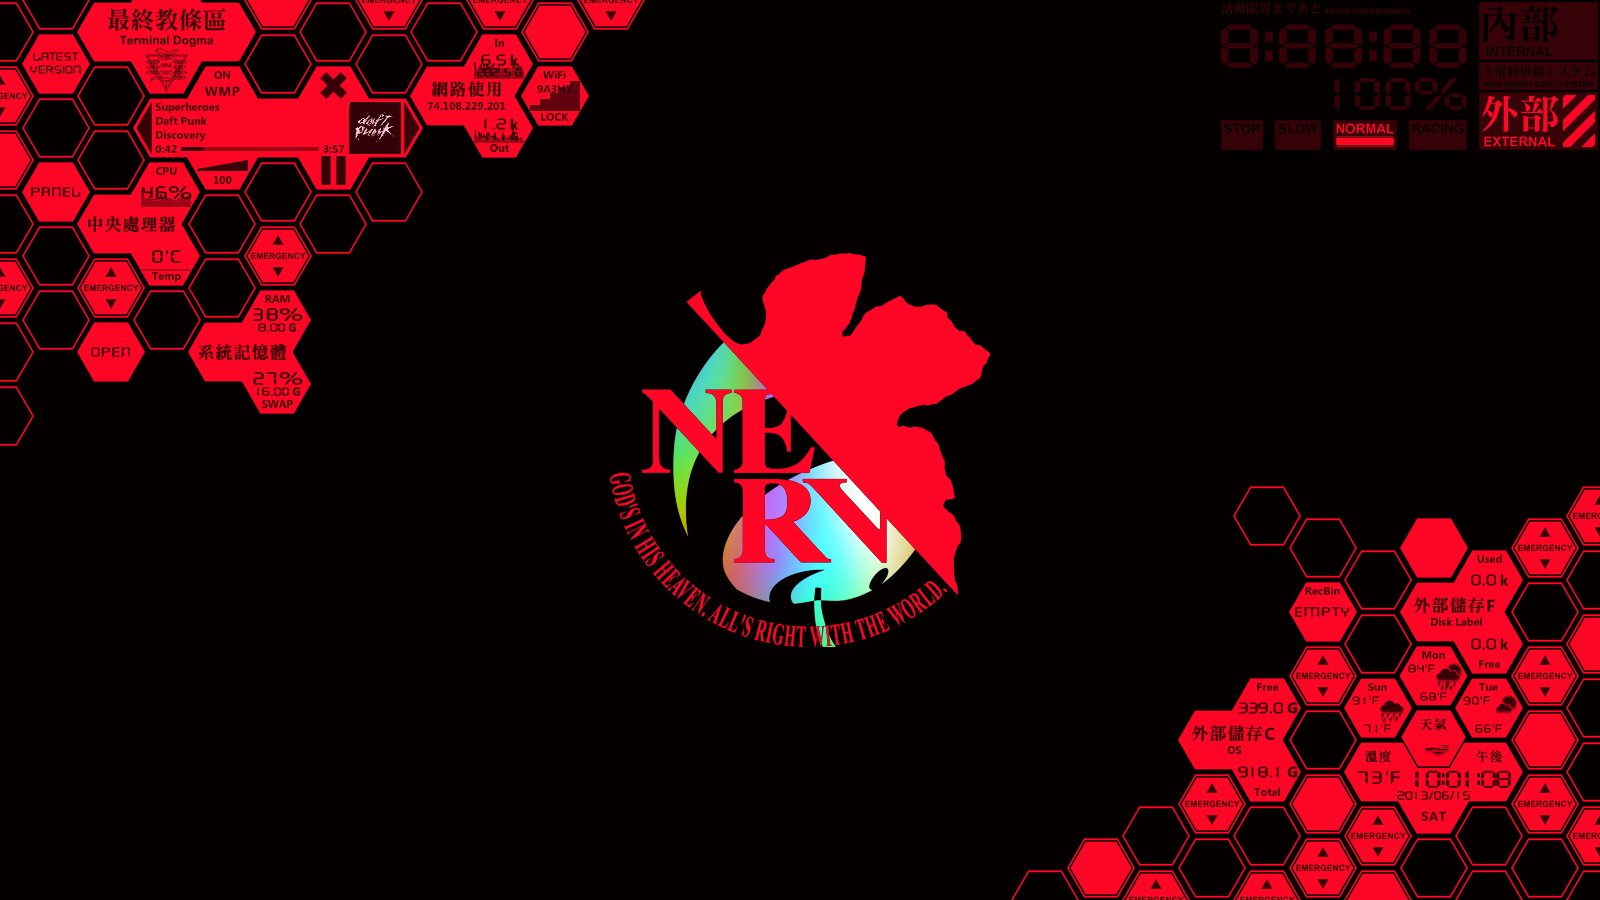 Evangelion Nerv Wallpapers Hd Desktop And Mobile Backgrounds